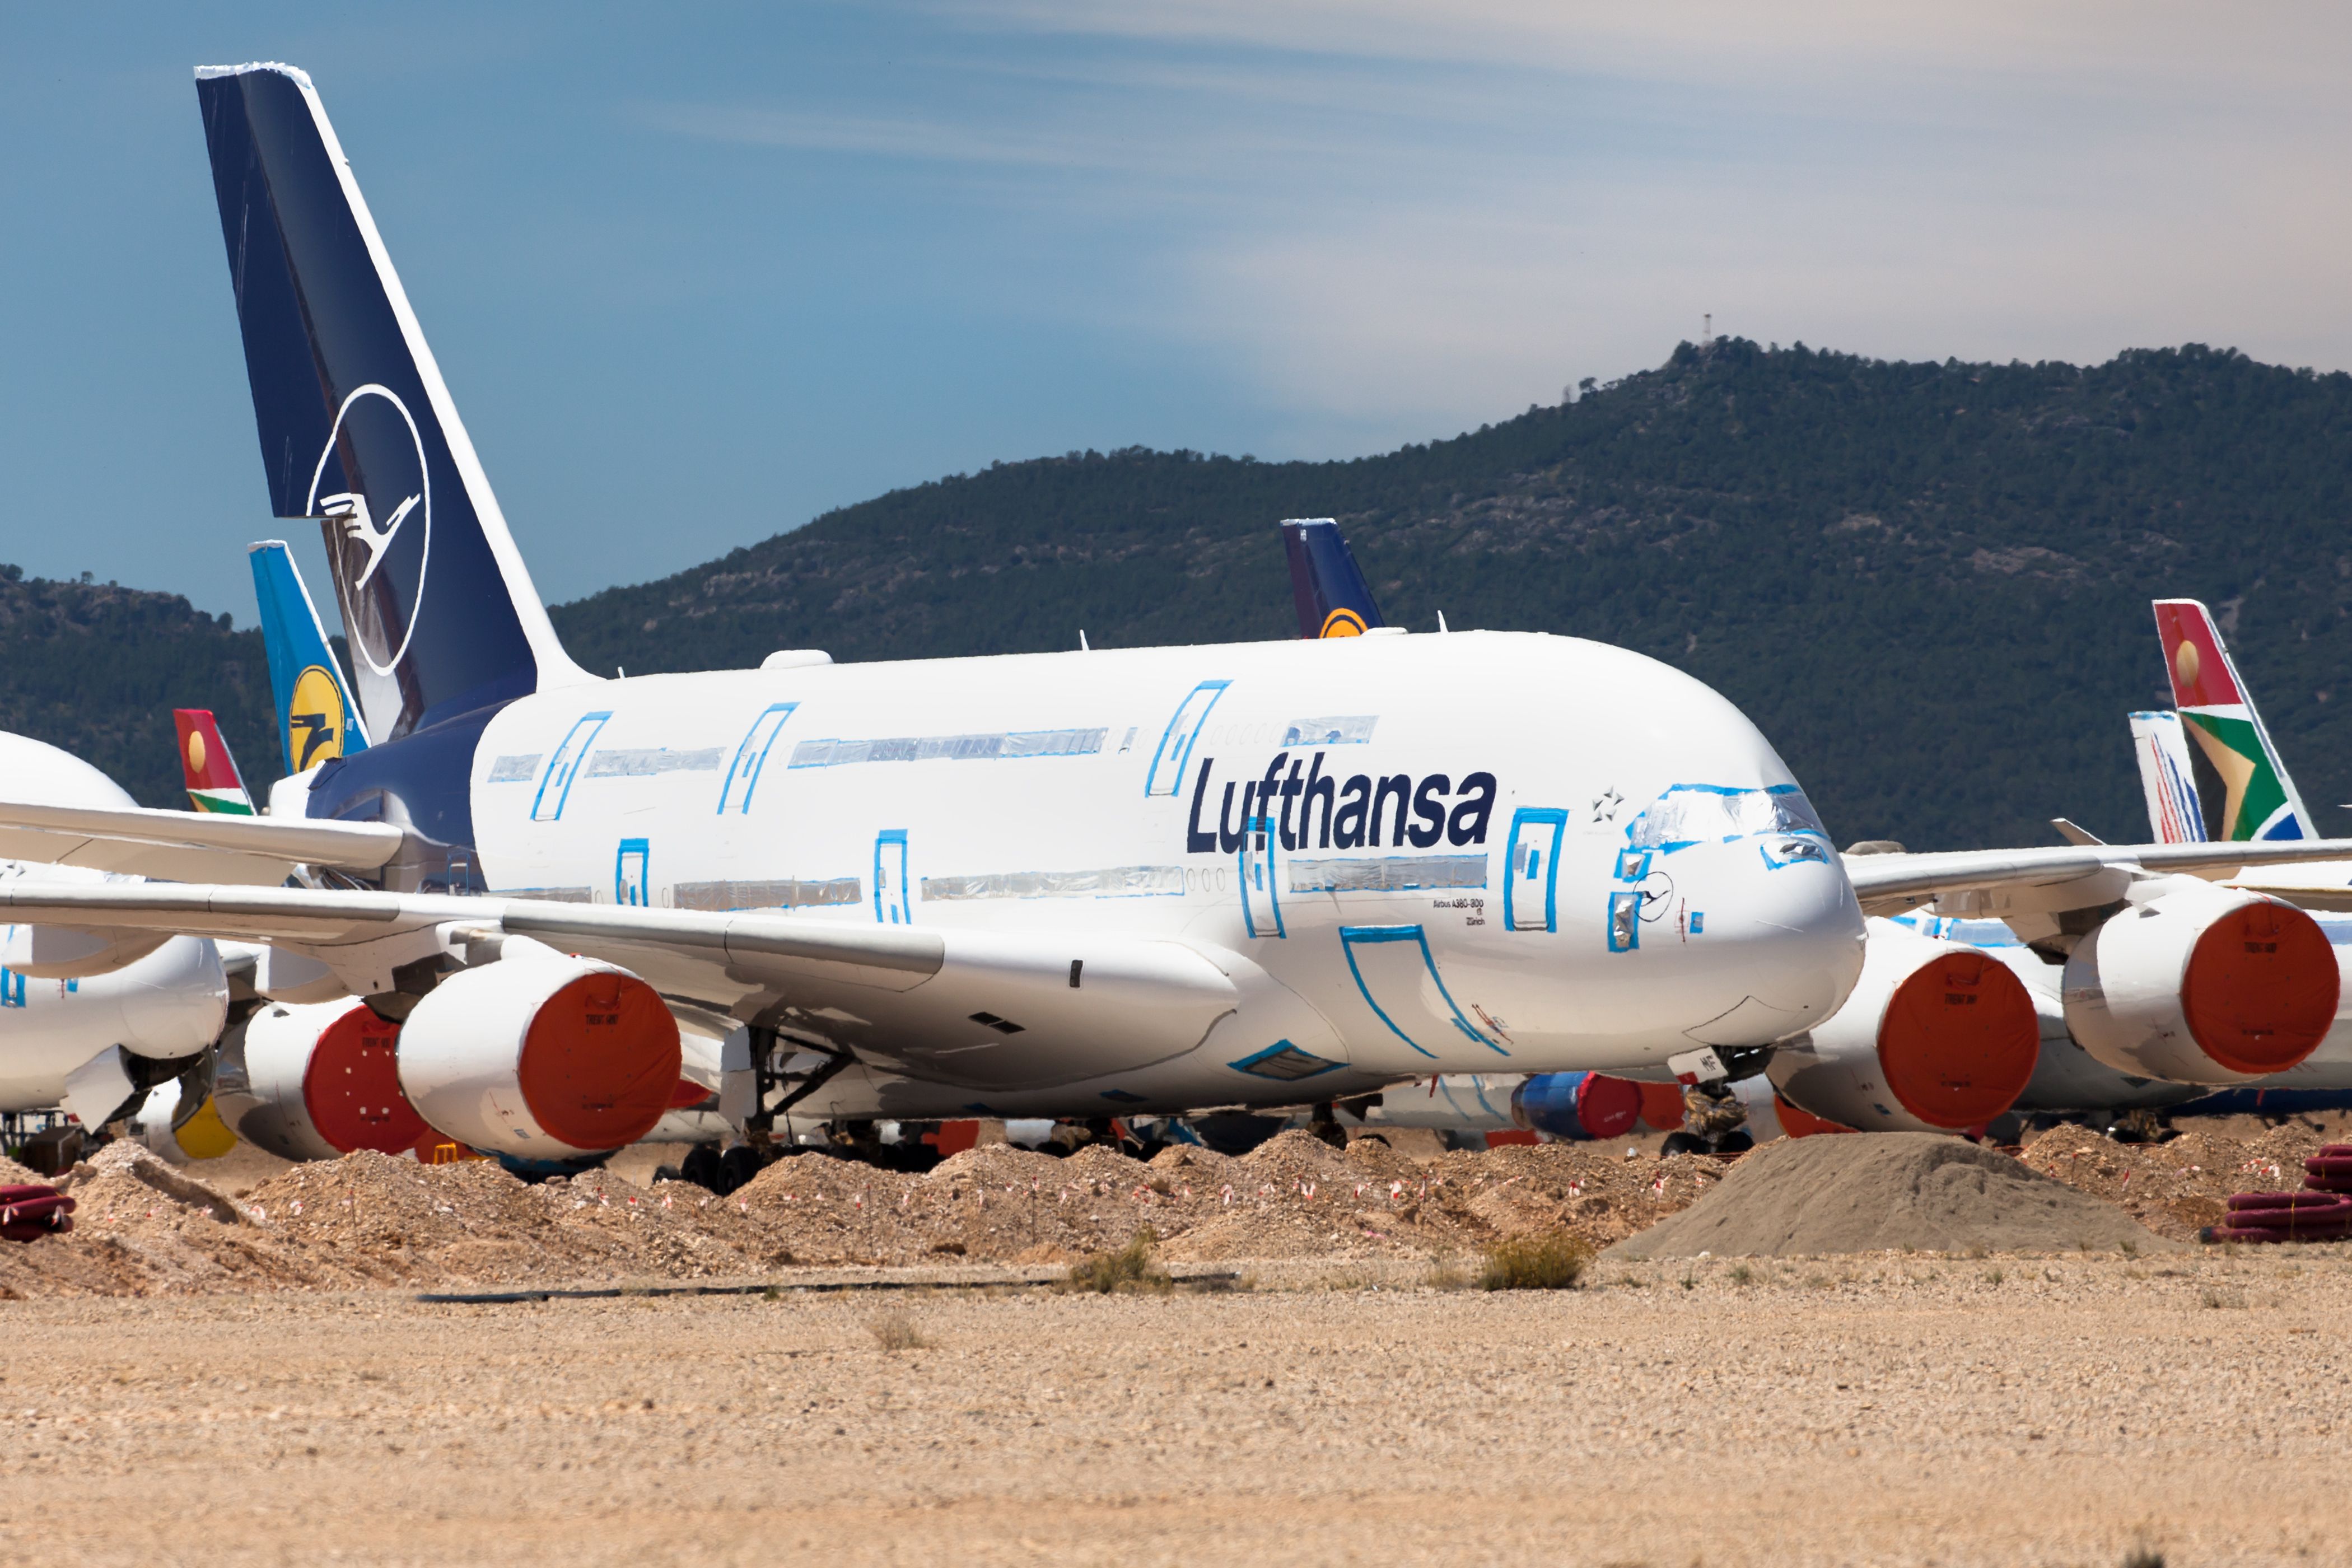 Lufthansa A380s in storage at Teruel Airport